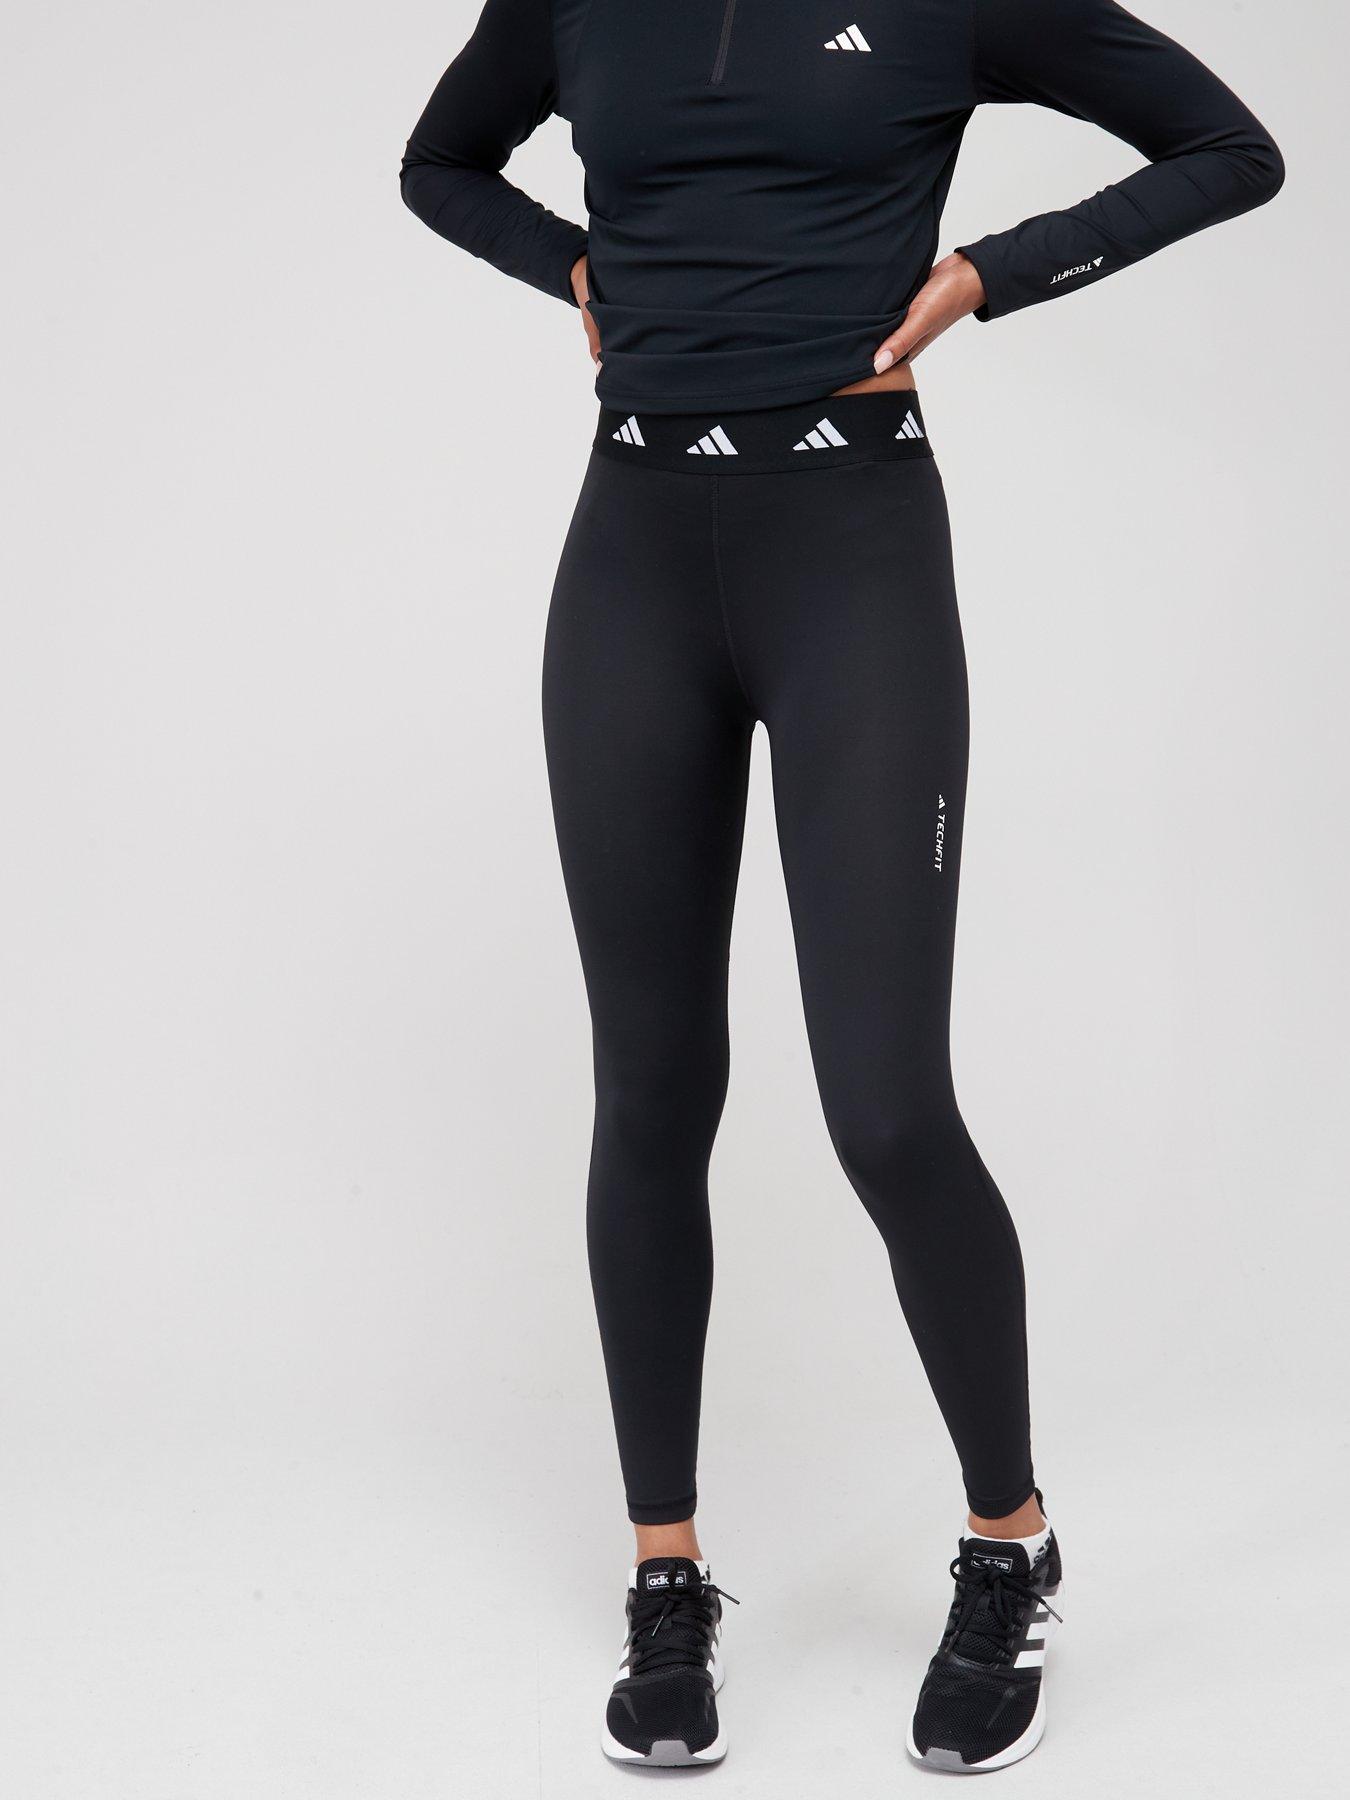 adidas womens Dailyrun Full Length Tights Leggings, Black, XX-Small US at   Women's Clothing store